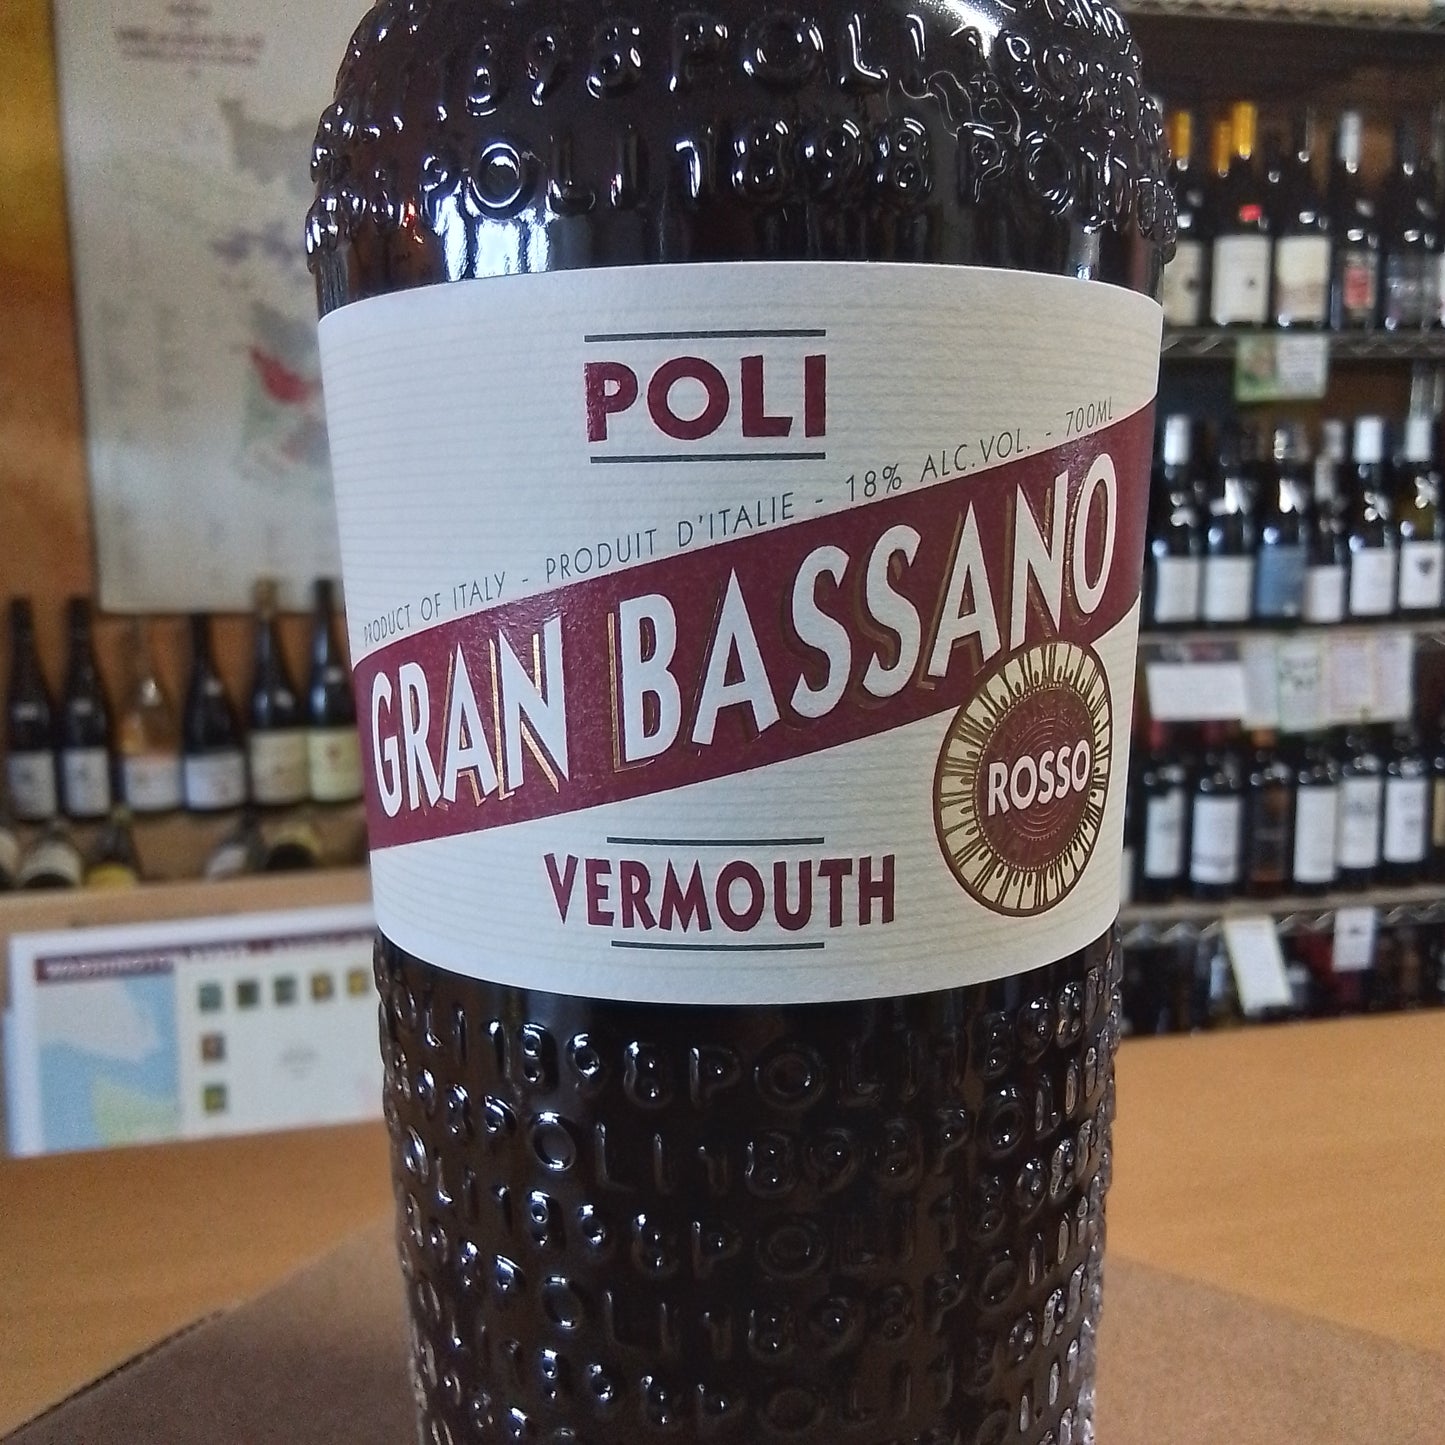 POLI Vermouth 'Gran Bassano Rosso' (Italy)